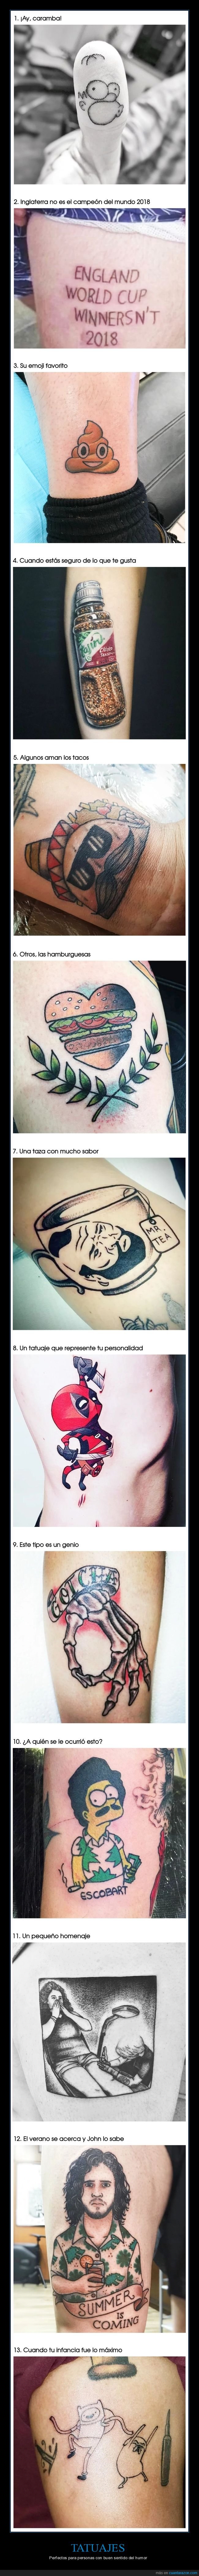 tatuajes,sentido del humor,wtf